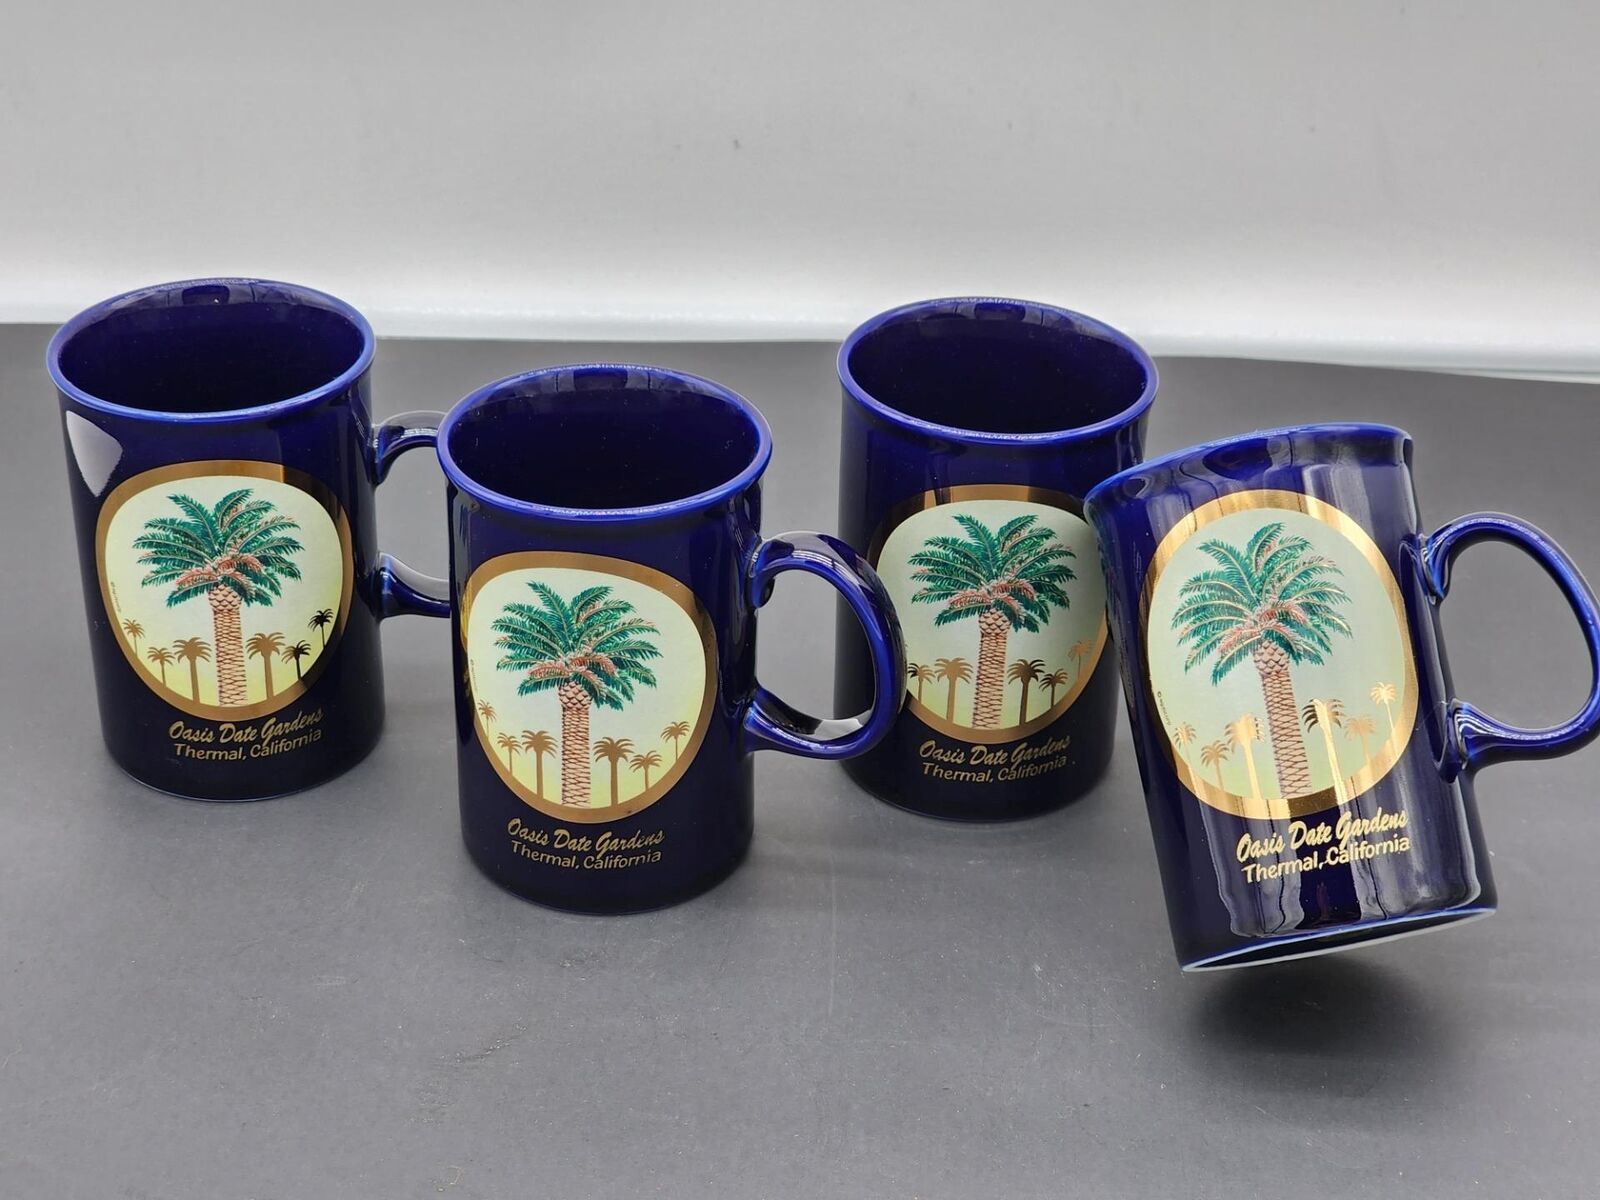 The Art of Chokin Vintage 4 Mug Set OASIS DATE GARDEN 24kt Gold California